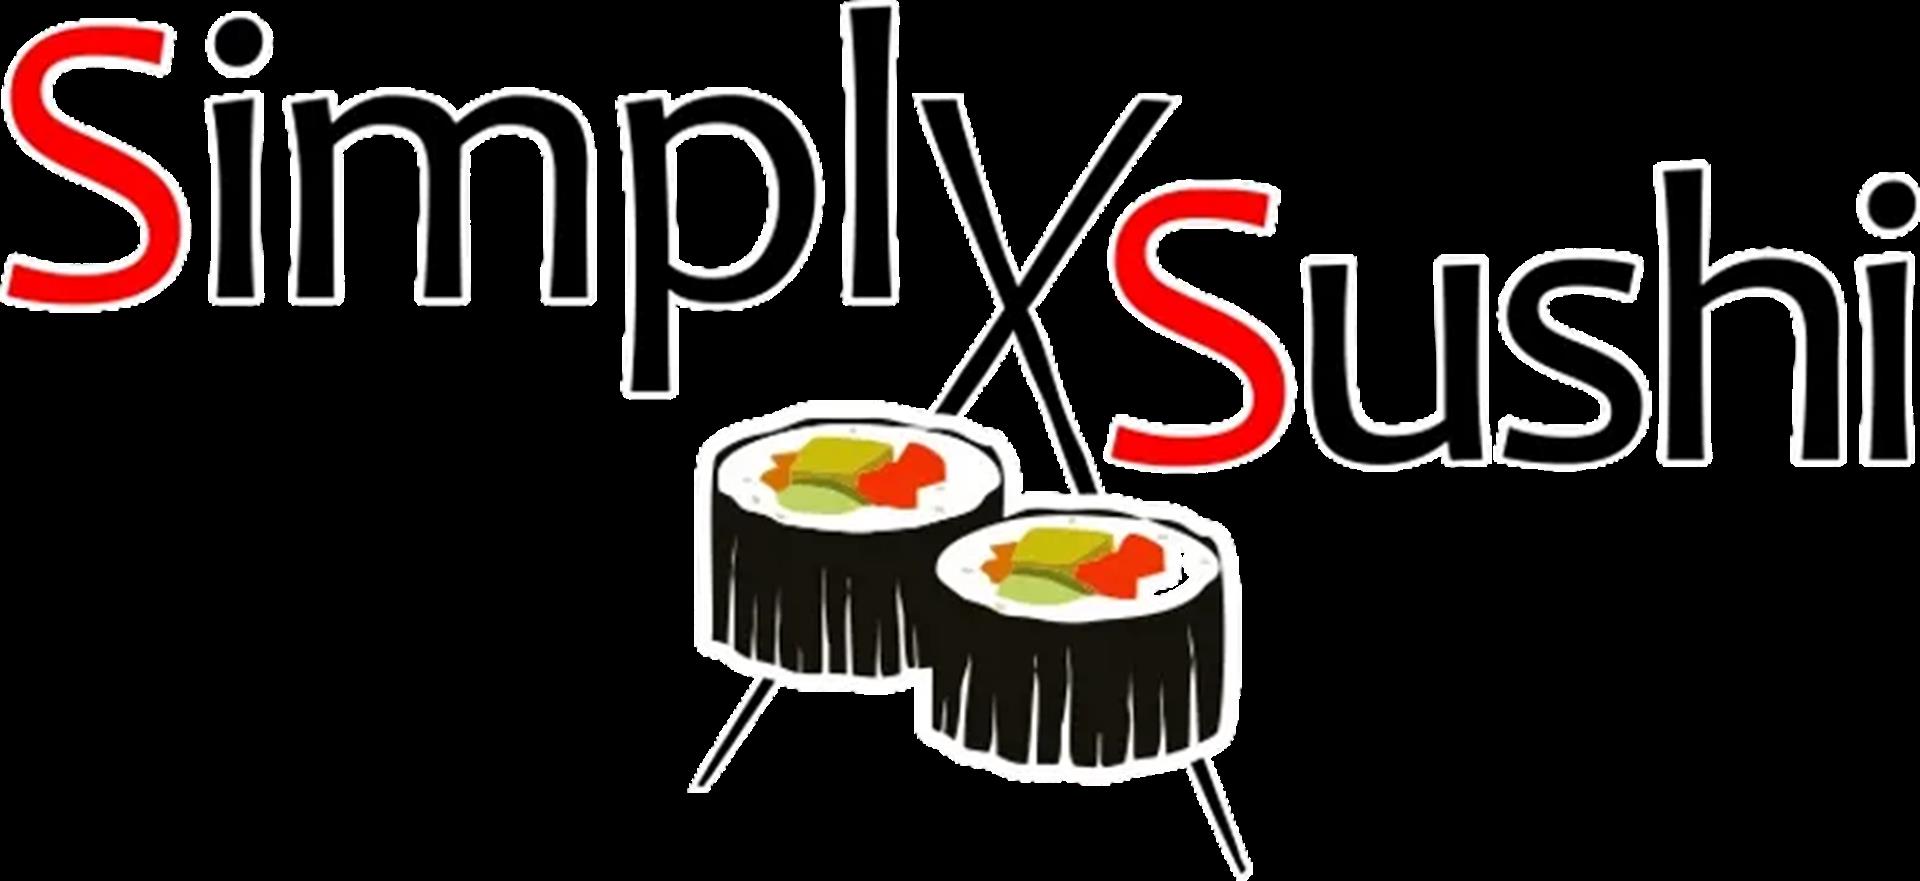 simplysushi